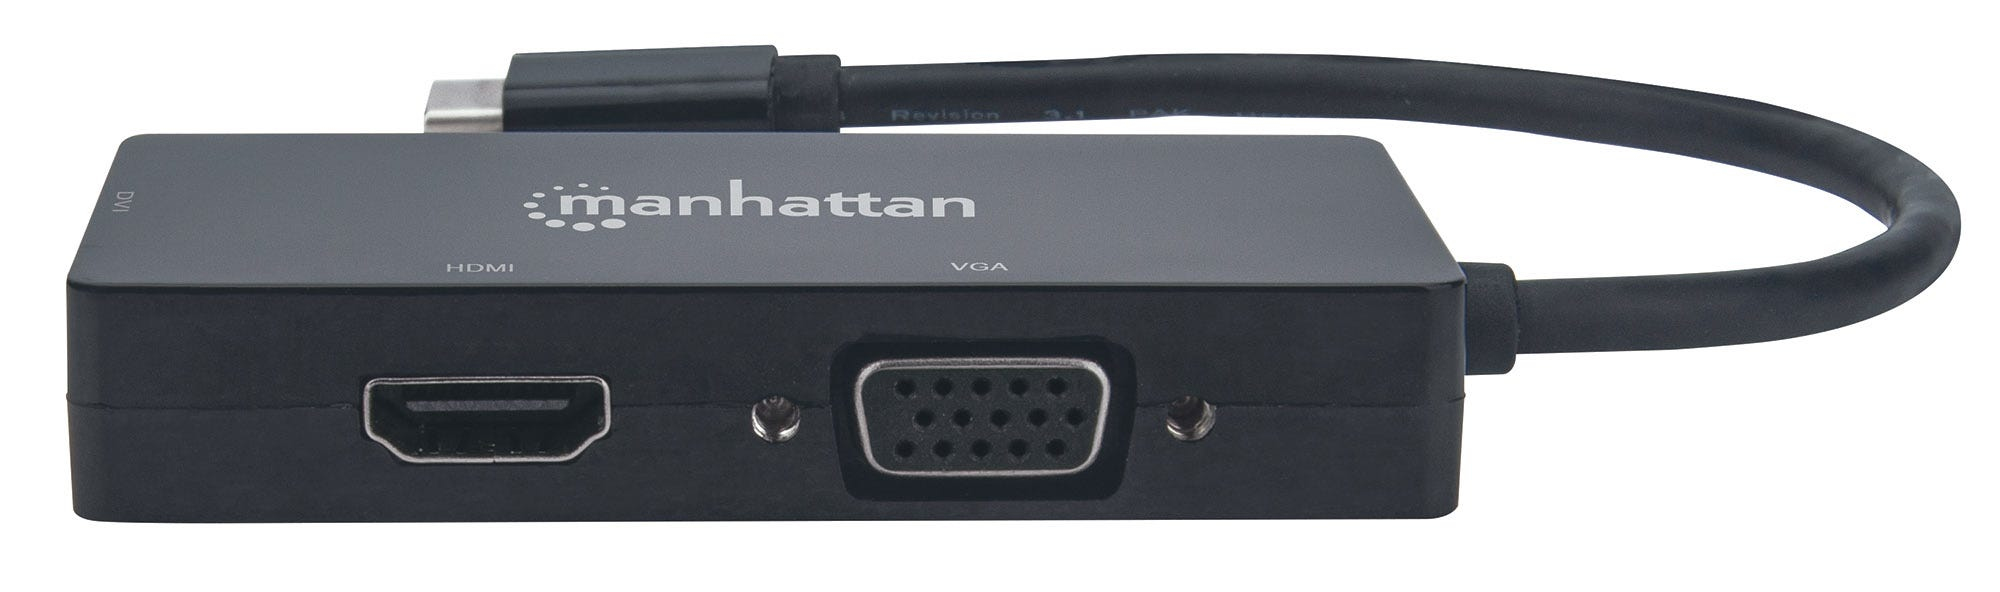 Manhattan USB-C 3-Port Hub/Dock/Converter, USB-C to DVI, HDMI or VGA Ports, HDMI Ultra-High-Definition: 1080p@60Hz or 3840x2160p@30Hz (4K), VGA or DVI: 60 Hz (1080p), Compatible with DVD-D, Male to Females, Cable 10cm, Black, Three Year Warranty, Blister